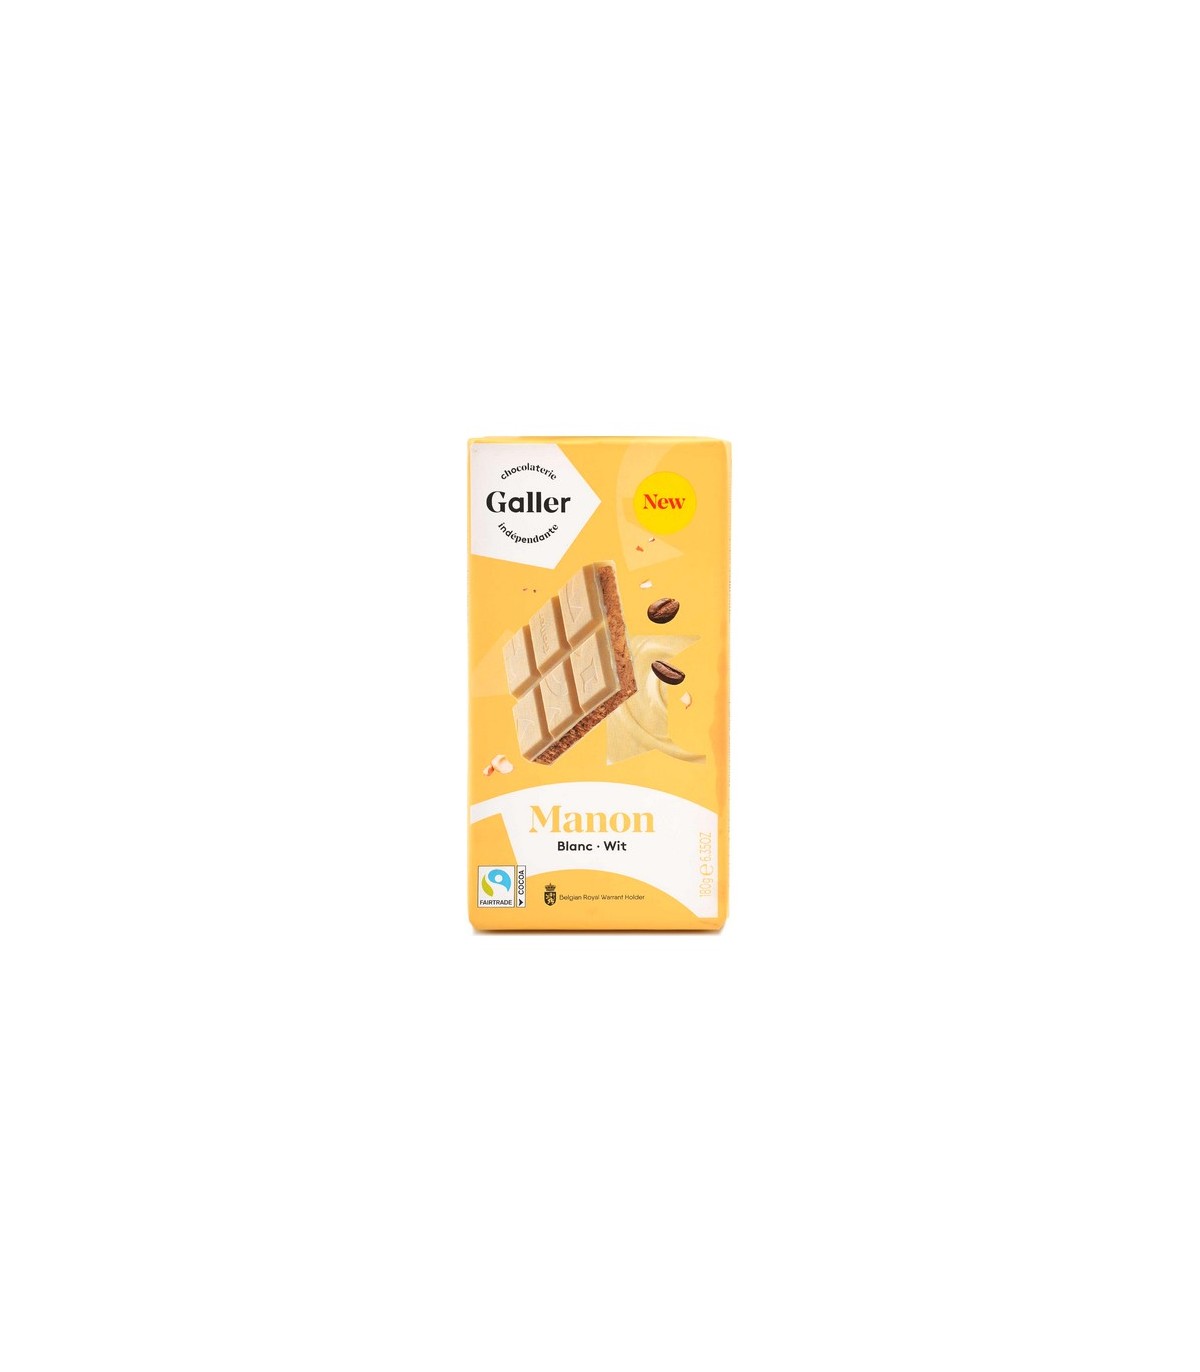 Tablette chocolat Monky - 35g